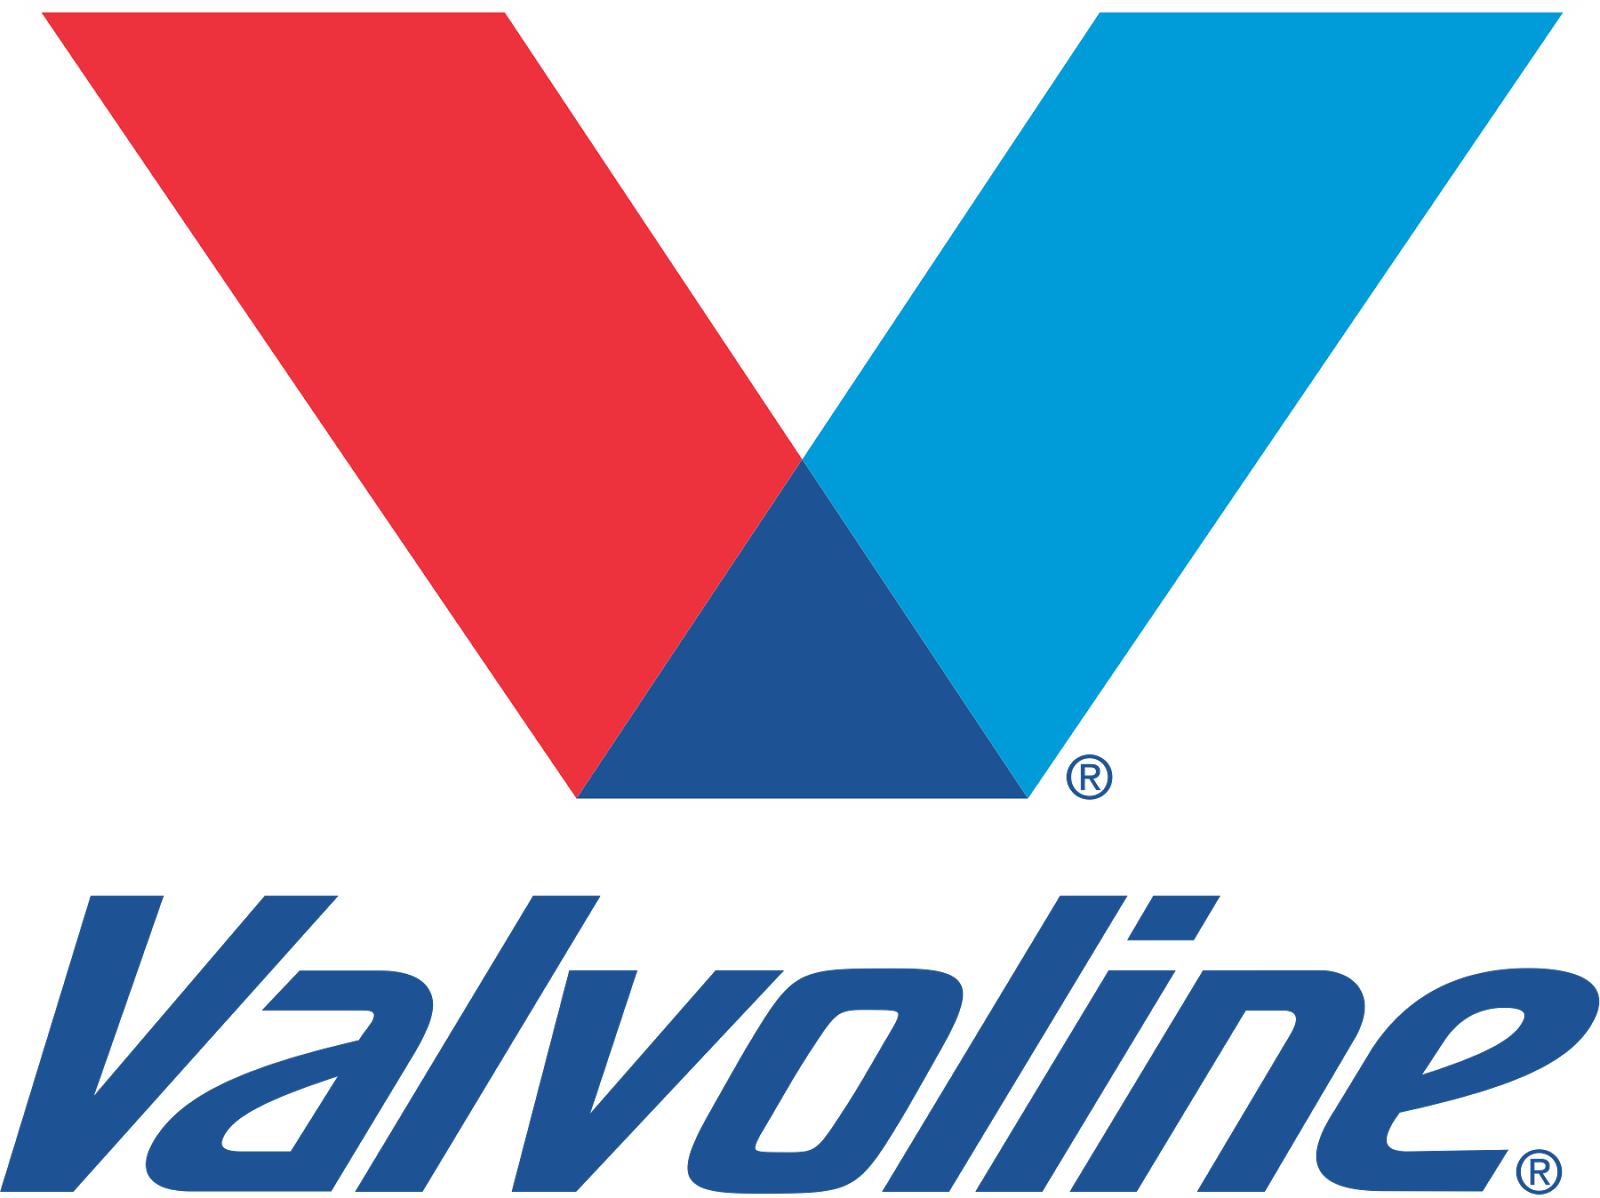 Масло лого. Valvoline логотип. Valvoline масло лого. Valvoline logo maslo Motor. Вольволайн масло логотип.